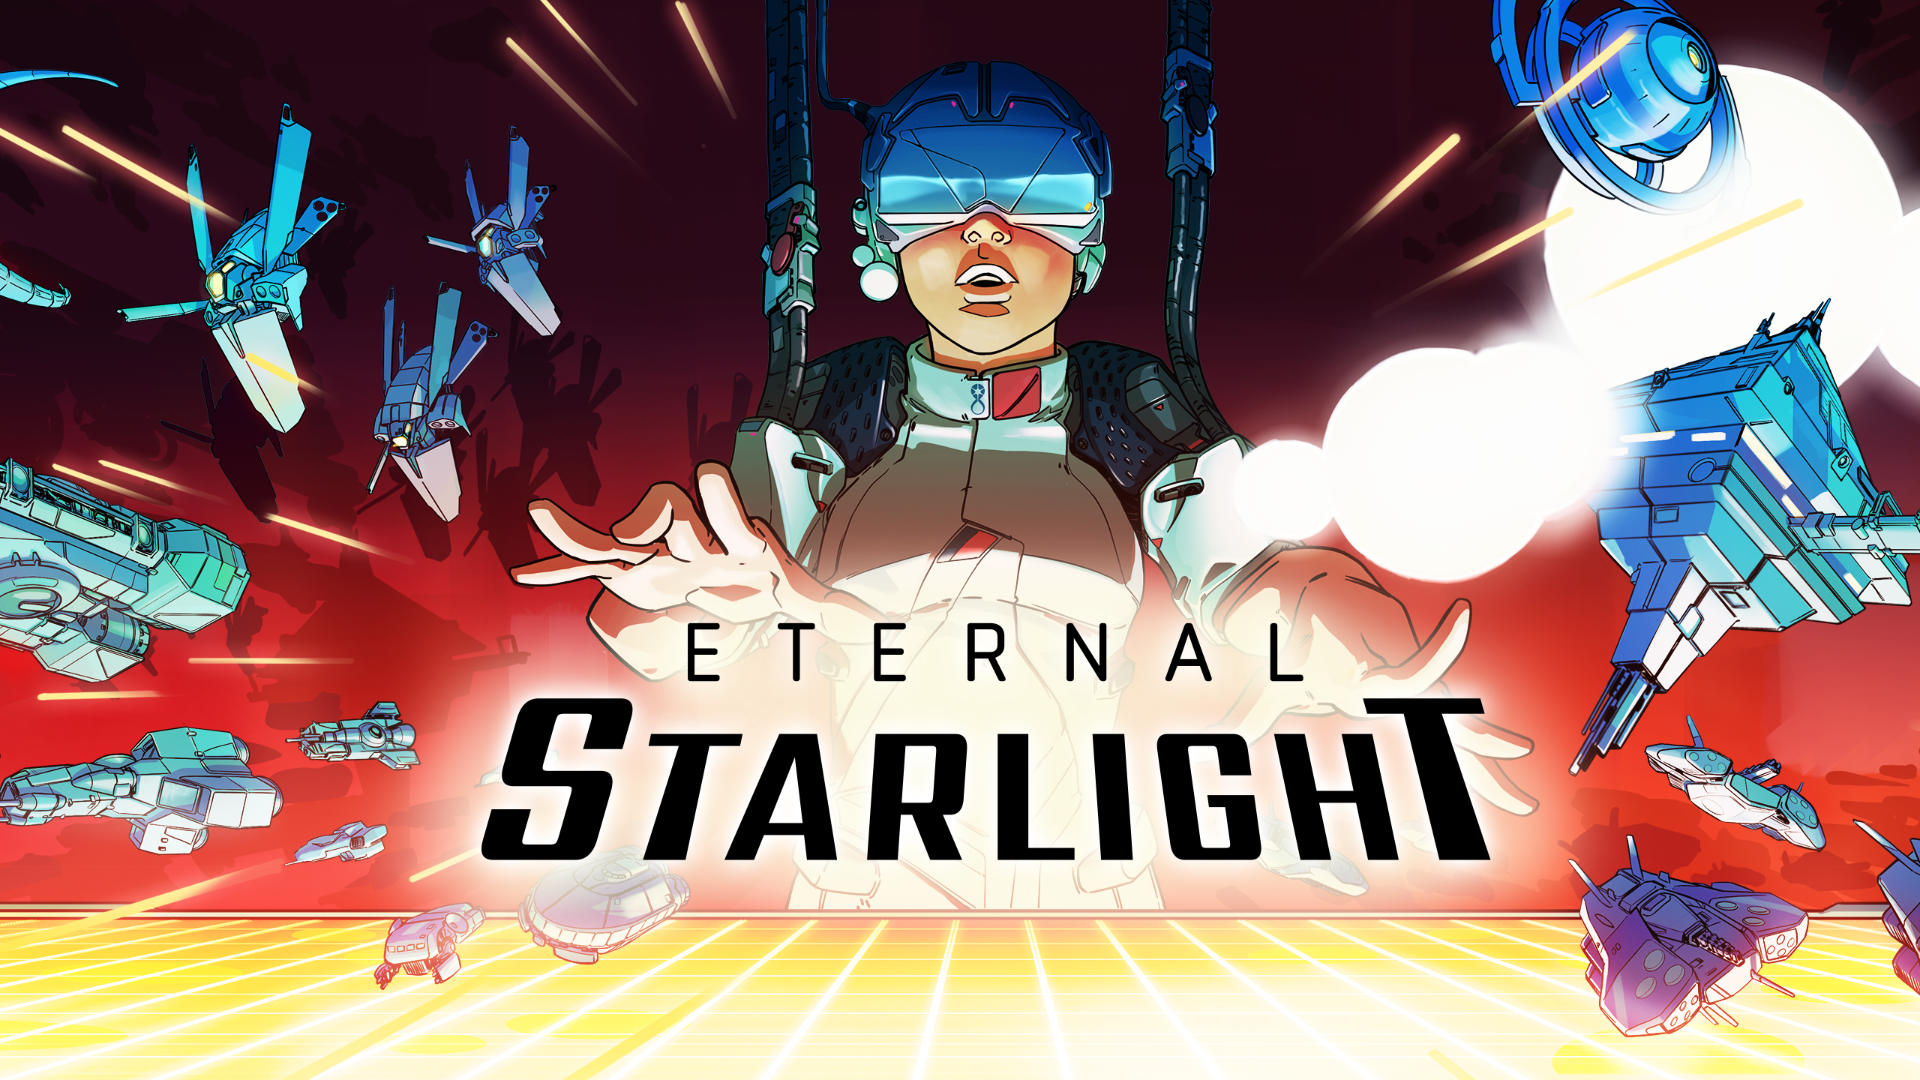 ETERNAL STARLIGHT VR